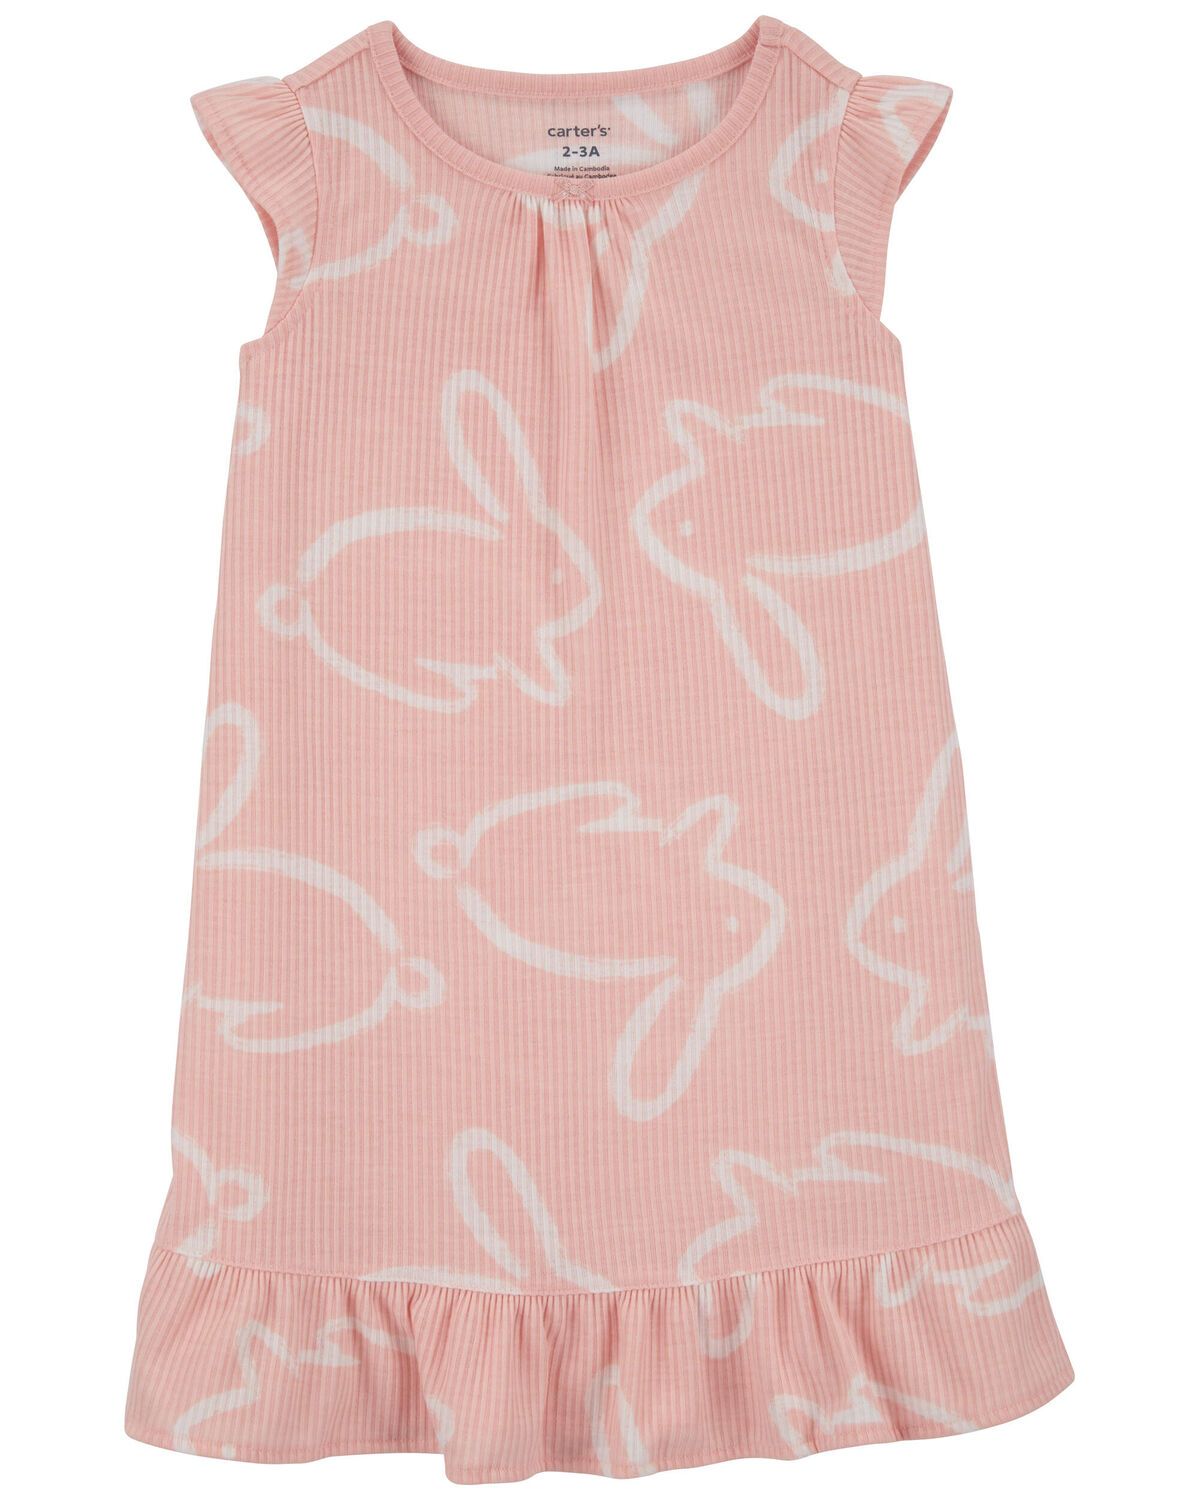 Pink Bunny Nightgown | carters.com | Carter's